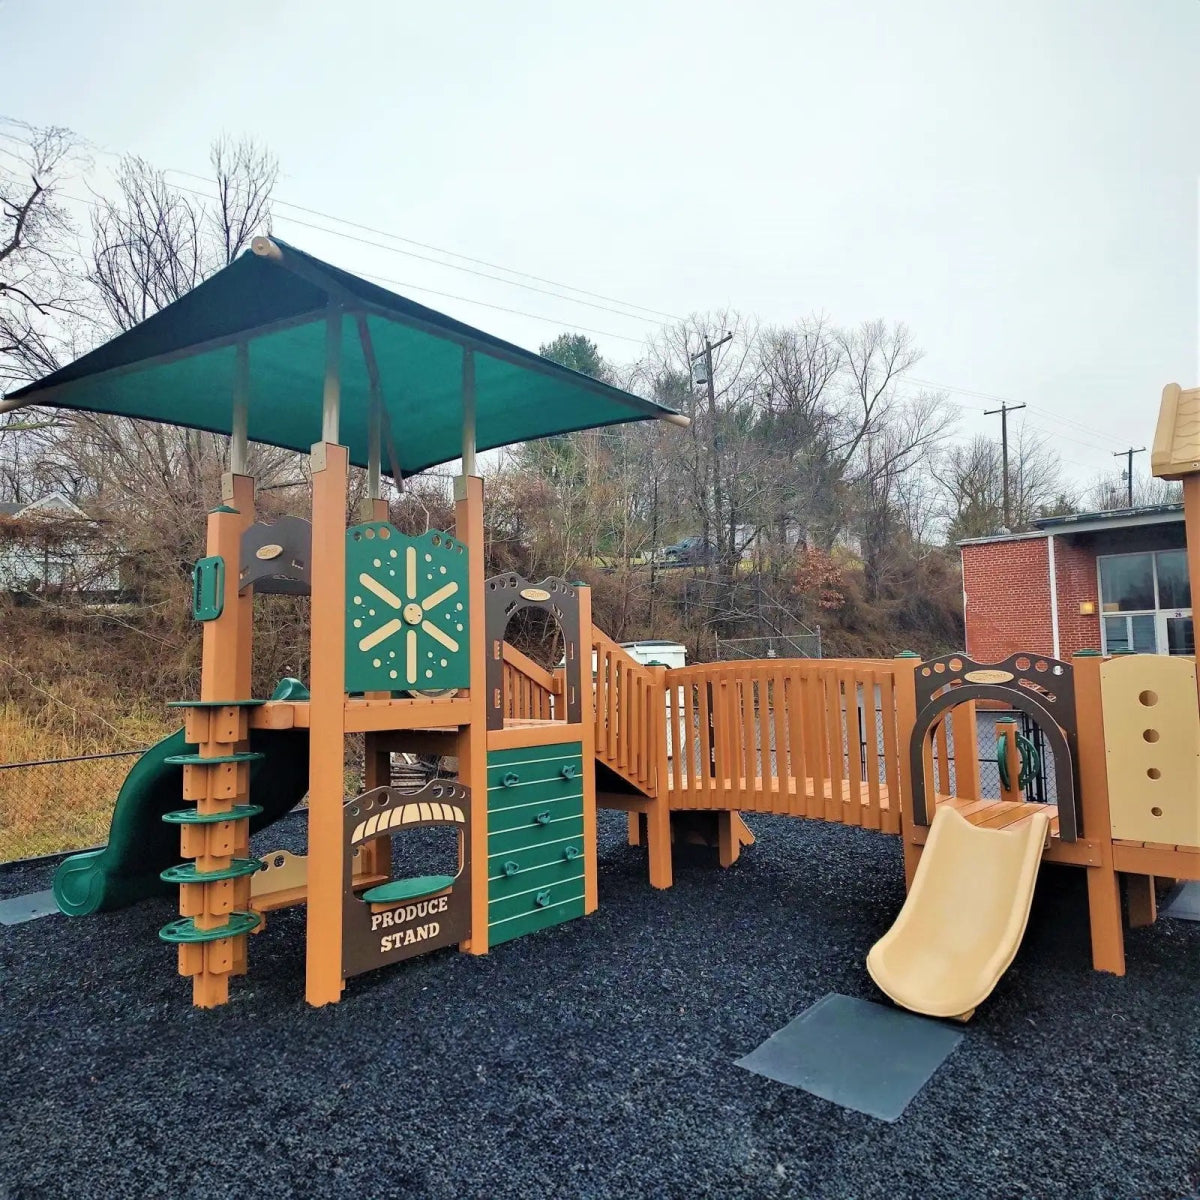 Trailblazer Playset - Preschool Playgrounds - Playtopia, Inc.